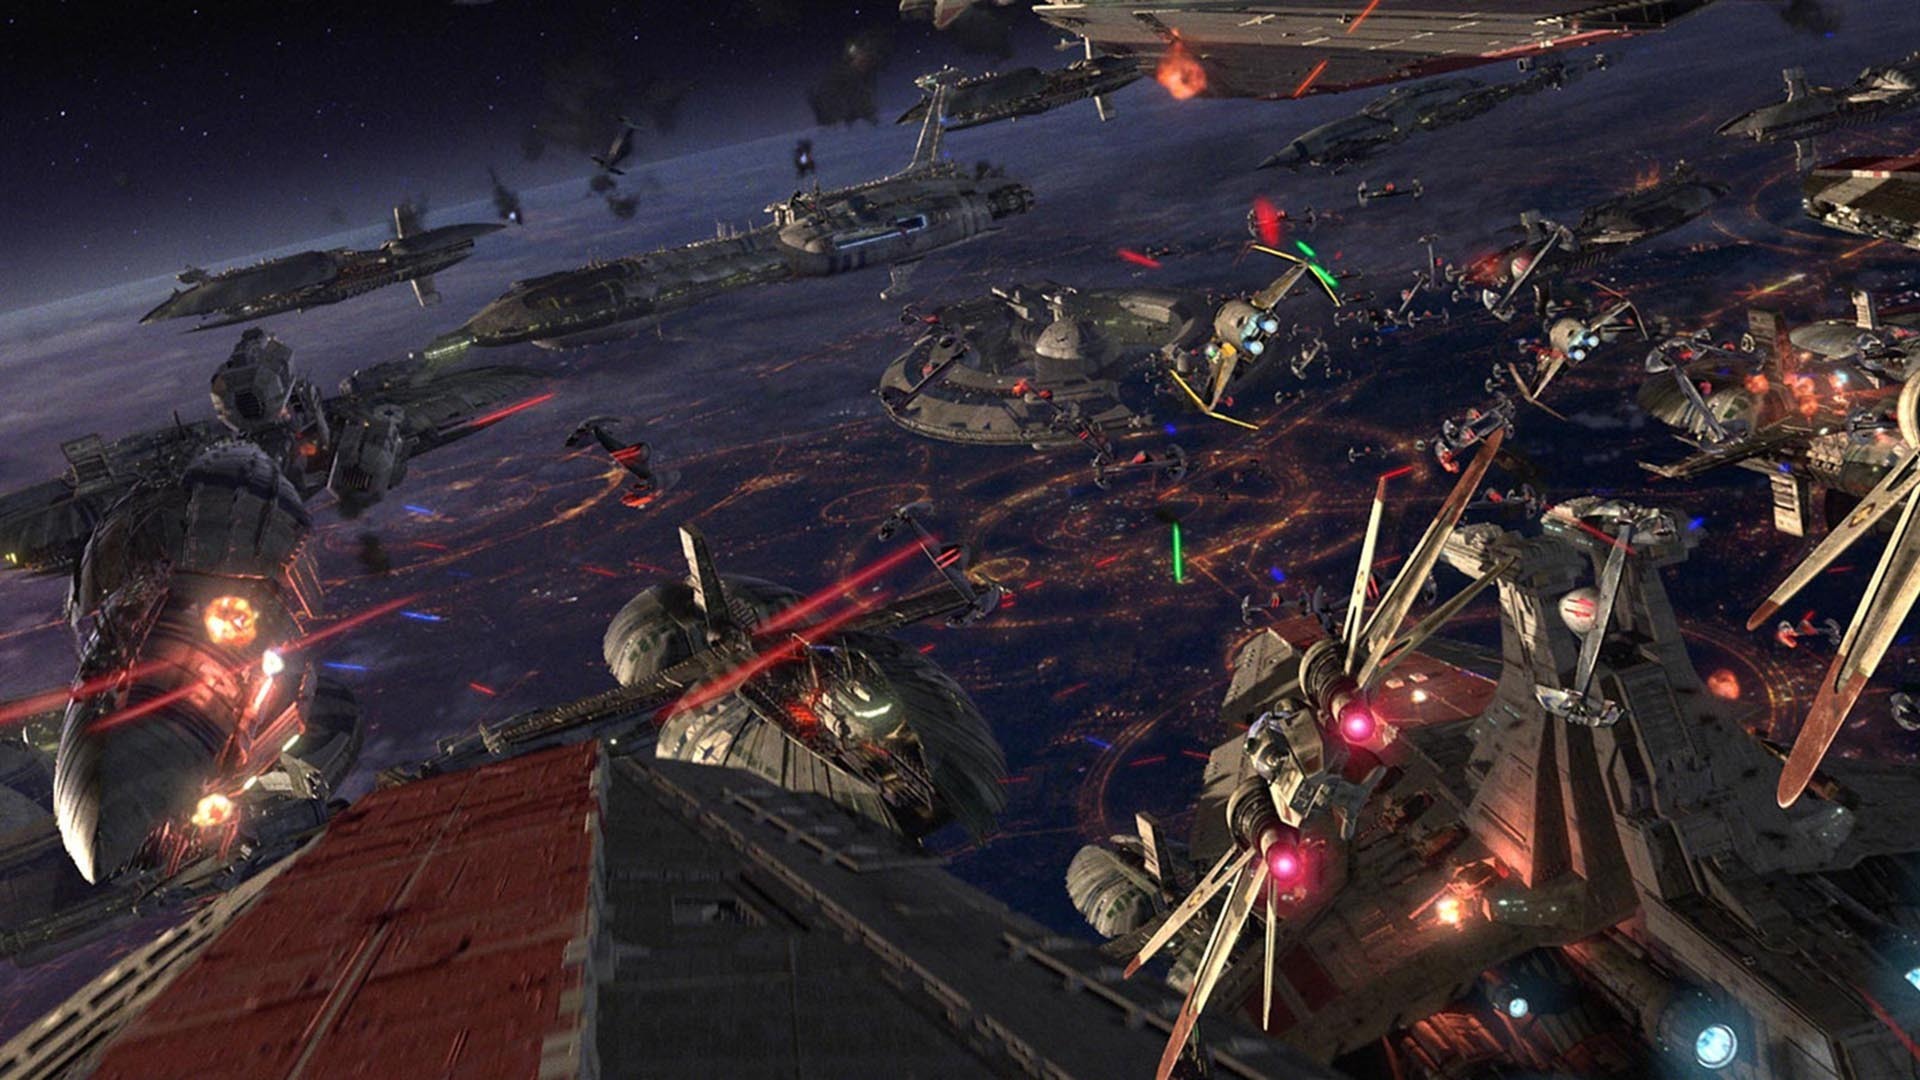 Star Wars Episode III Revenge of the Sith sci fi battle spaceship